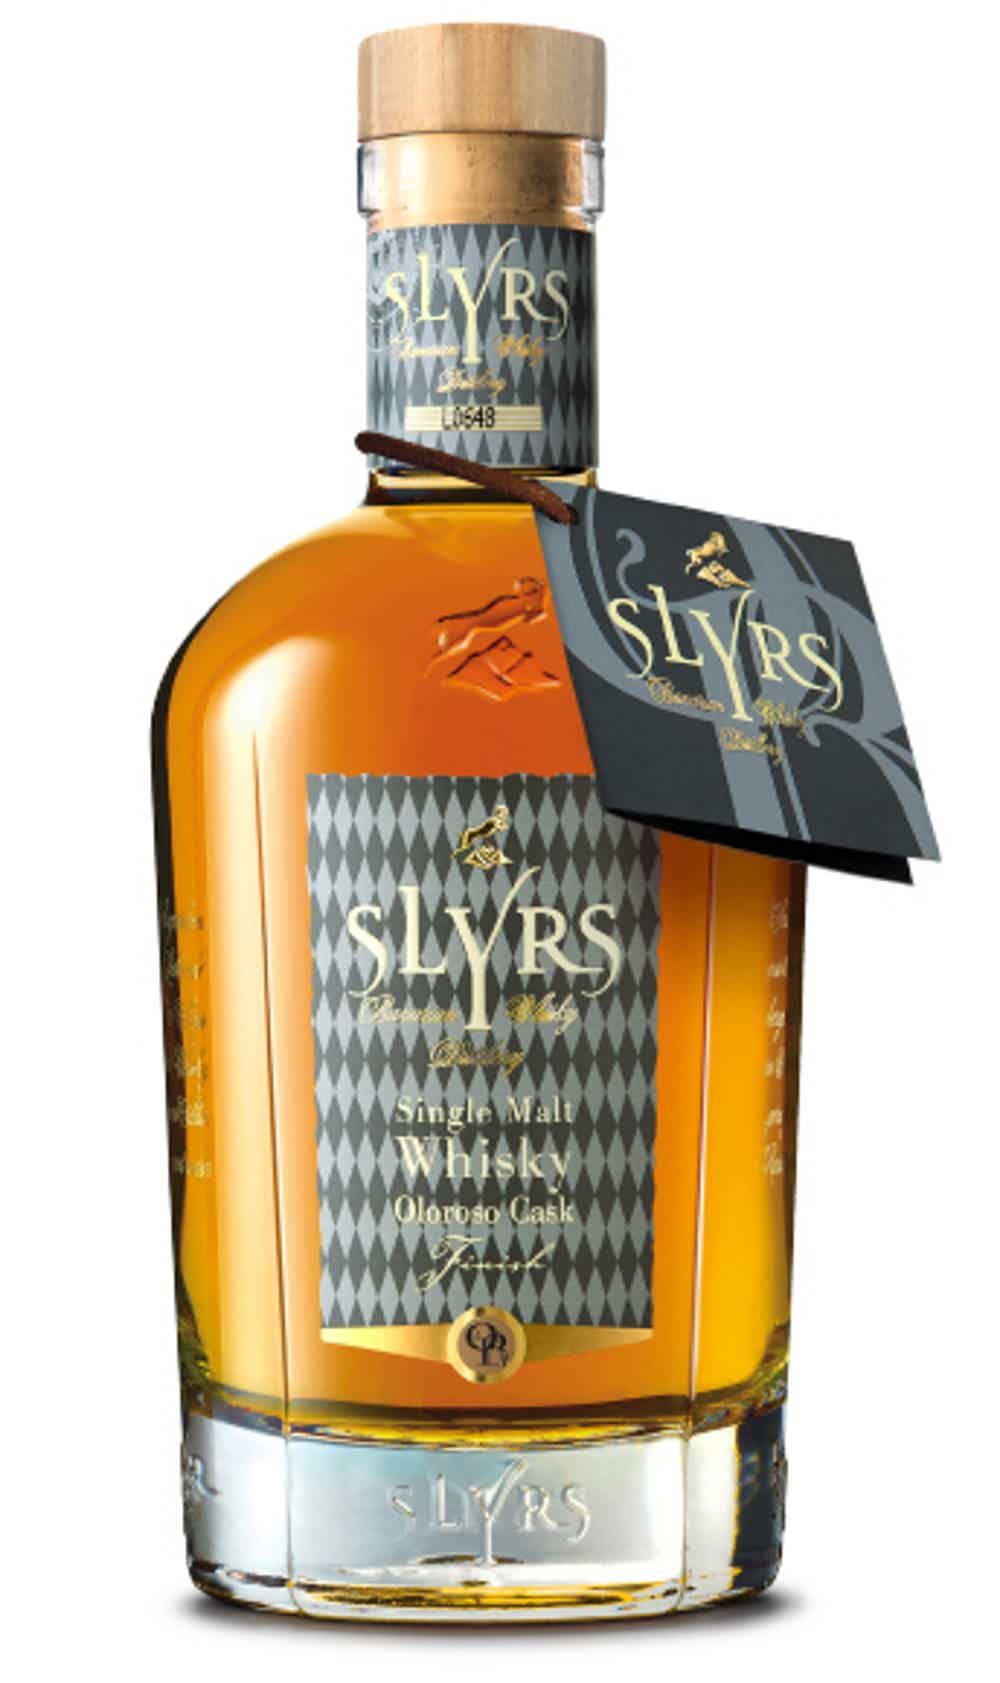 SLYRS Single Malt Whisky Oloroso Cask Finish 46% vol. 46.0% 0.35L, Spirits